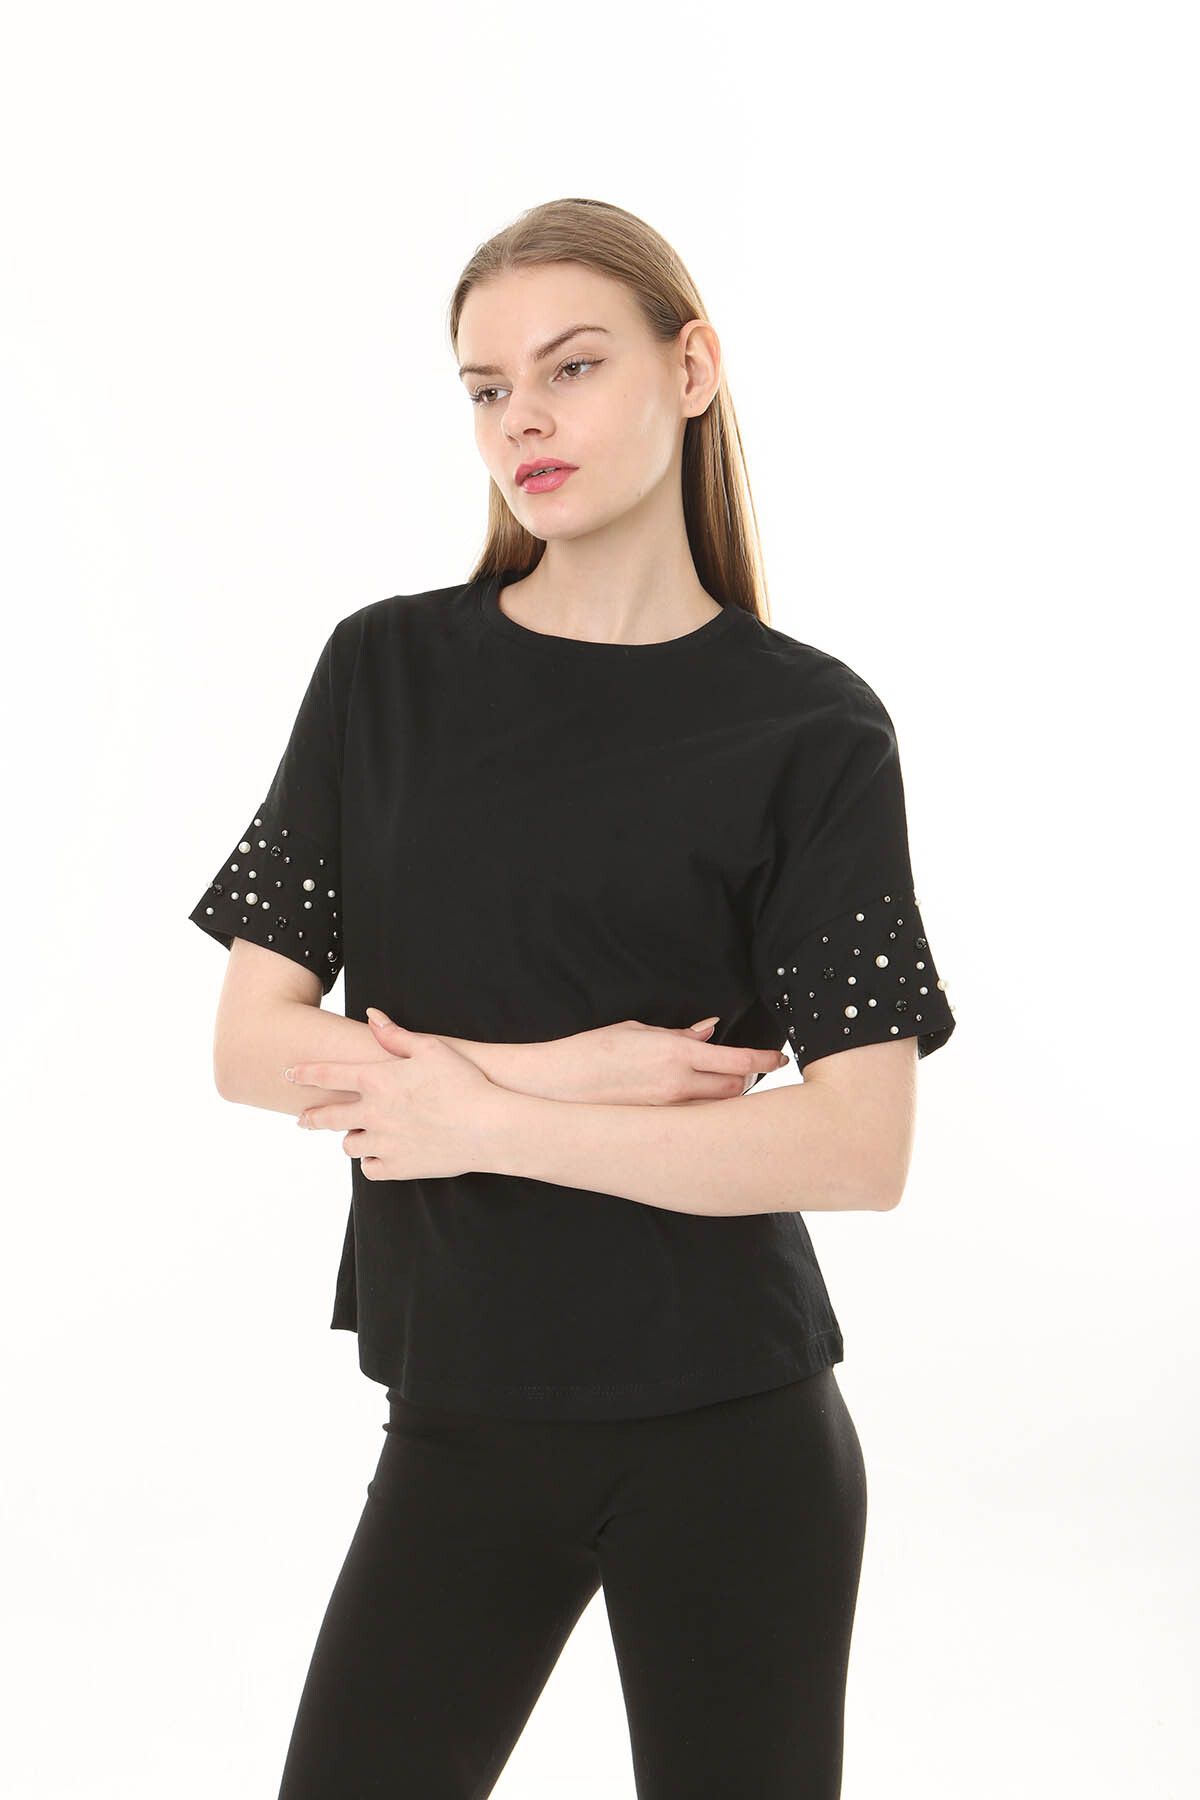 LİVE SPORT Kadın Yarasa Kol, Kolları İncili Pamuklu Örme T-shirt Siyah